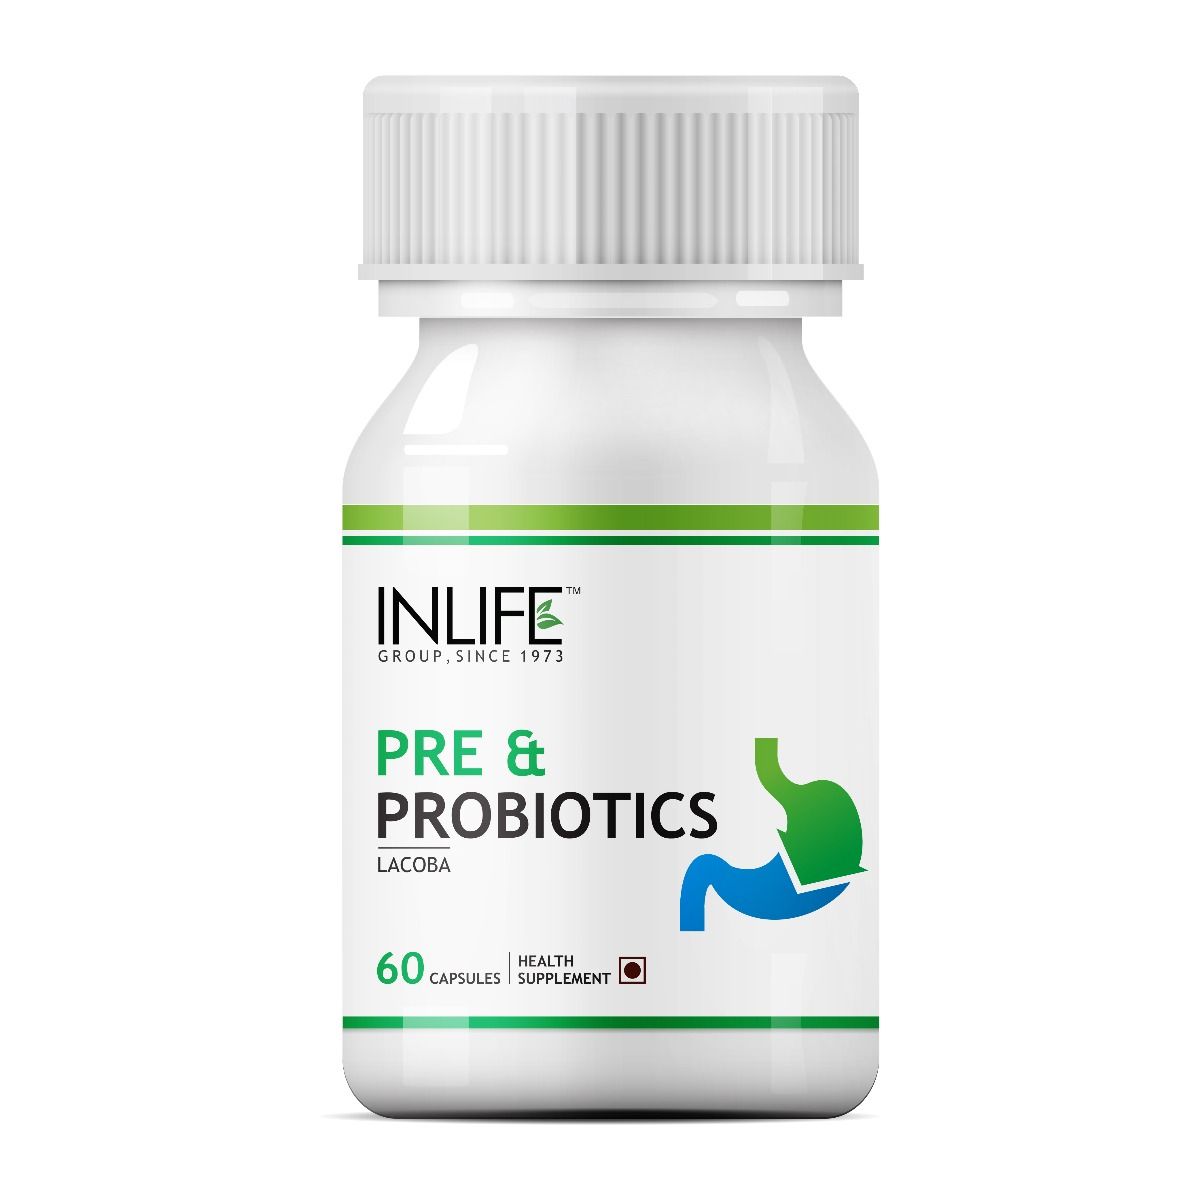 Inlife Pre and Probiotics, 60 Capsules, Pack of 1 